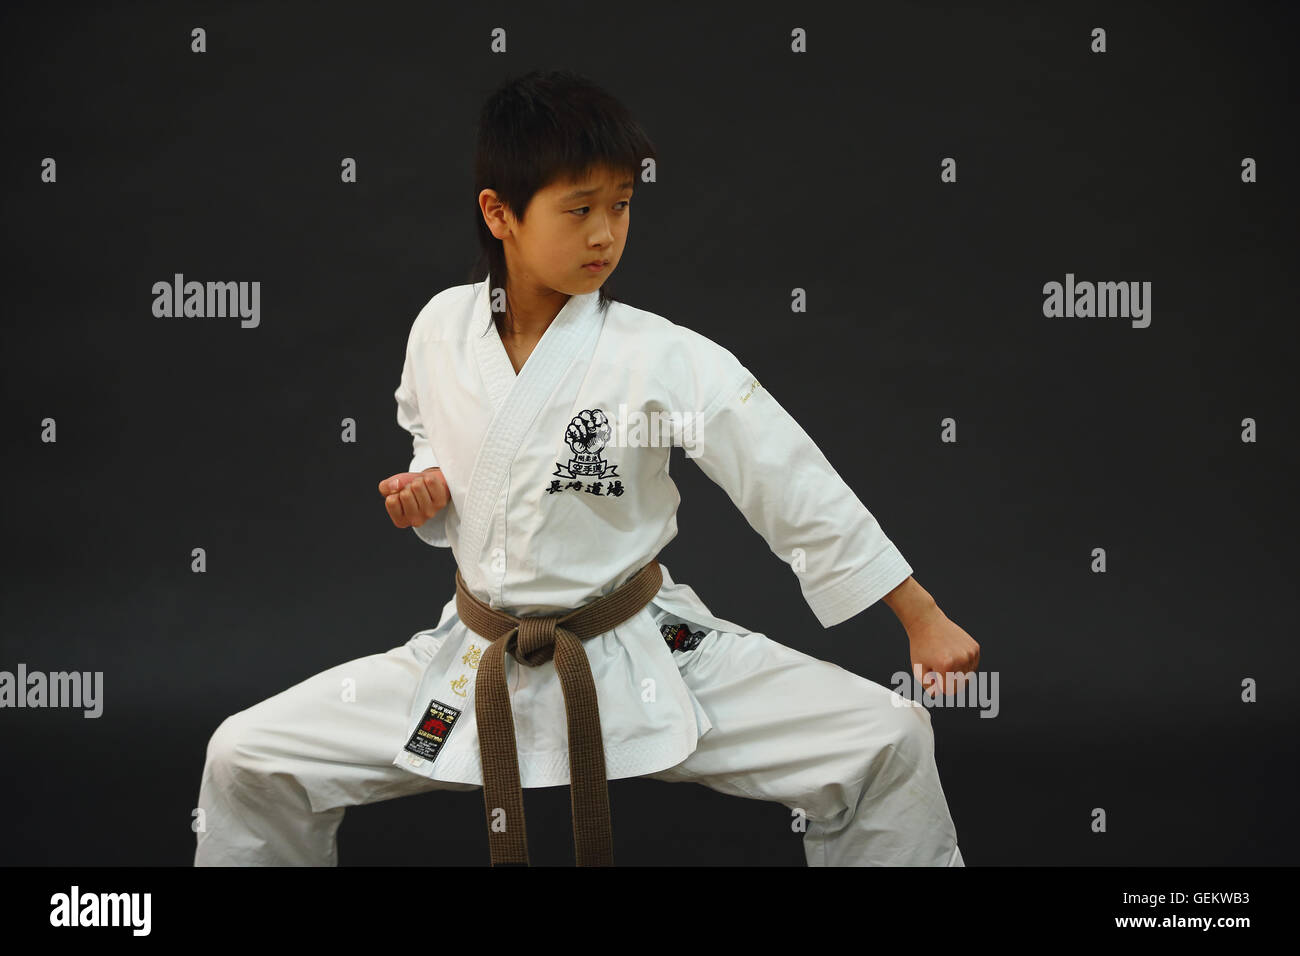 Uniforme de Karate Kid en japonés sobre fondo negro Foto de stock